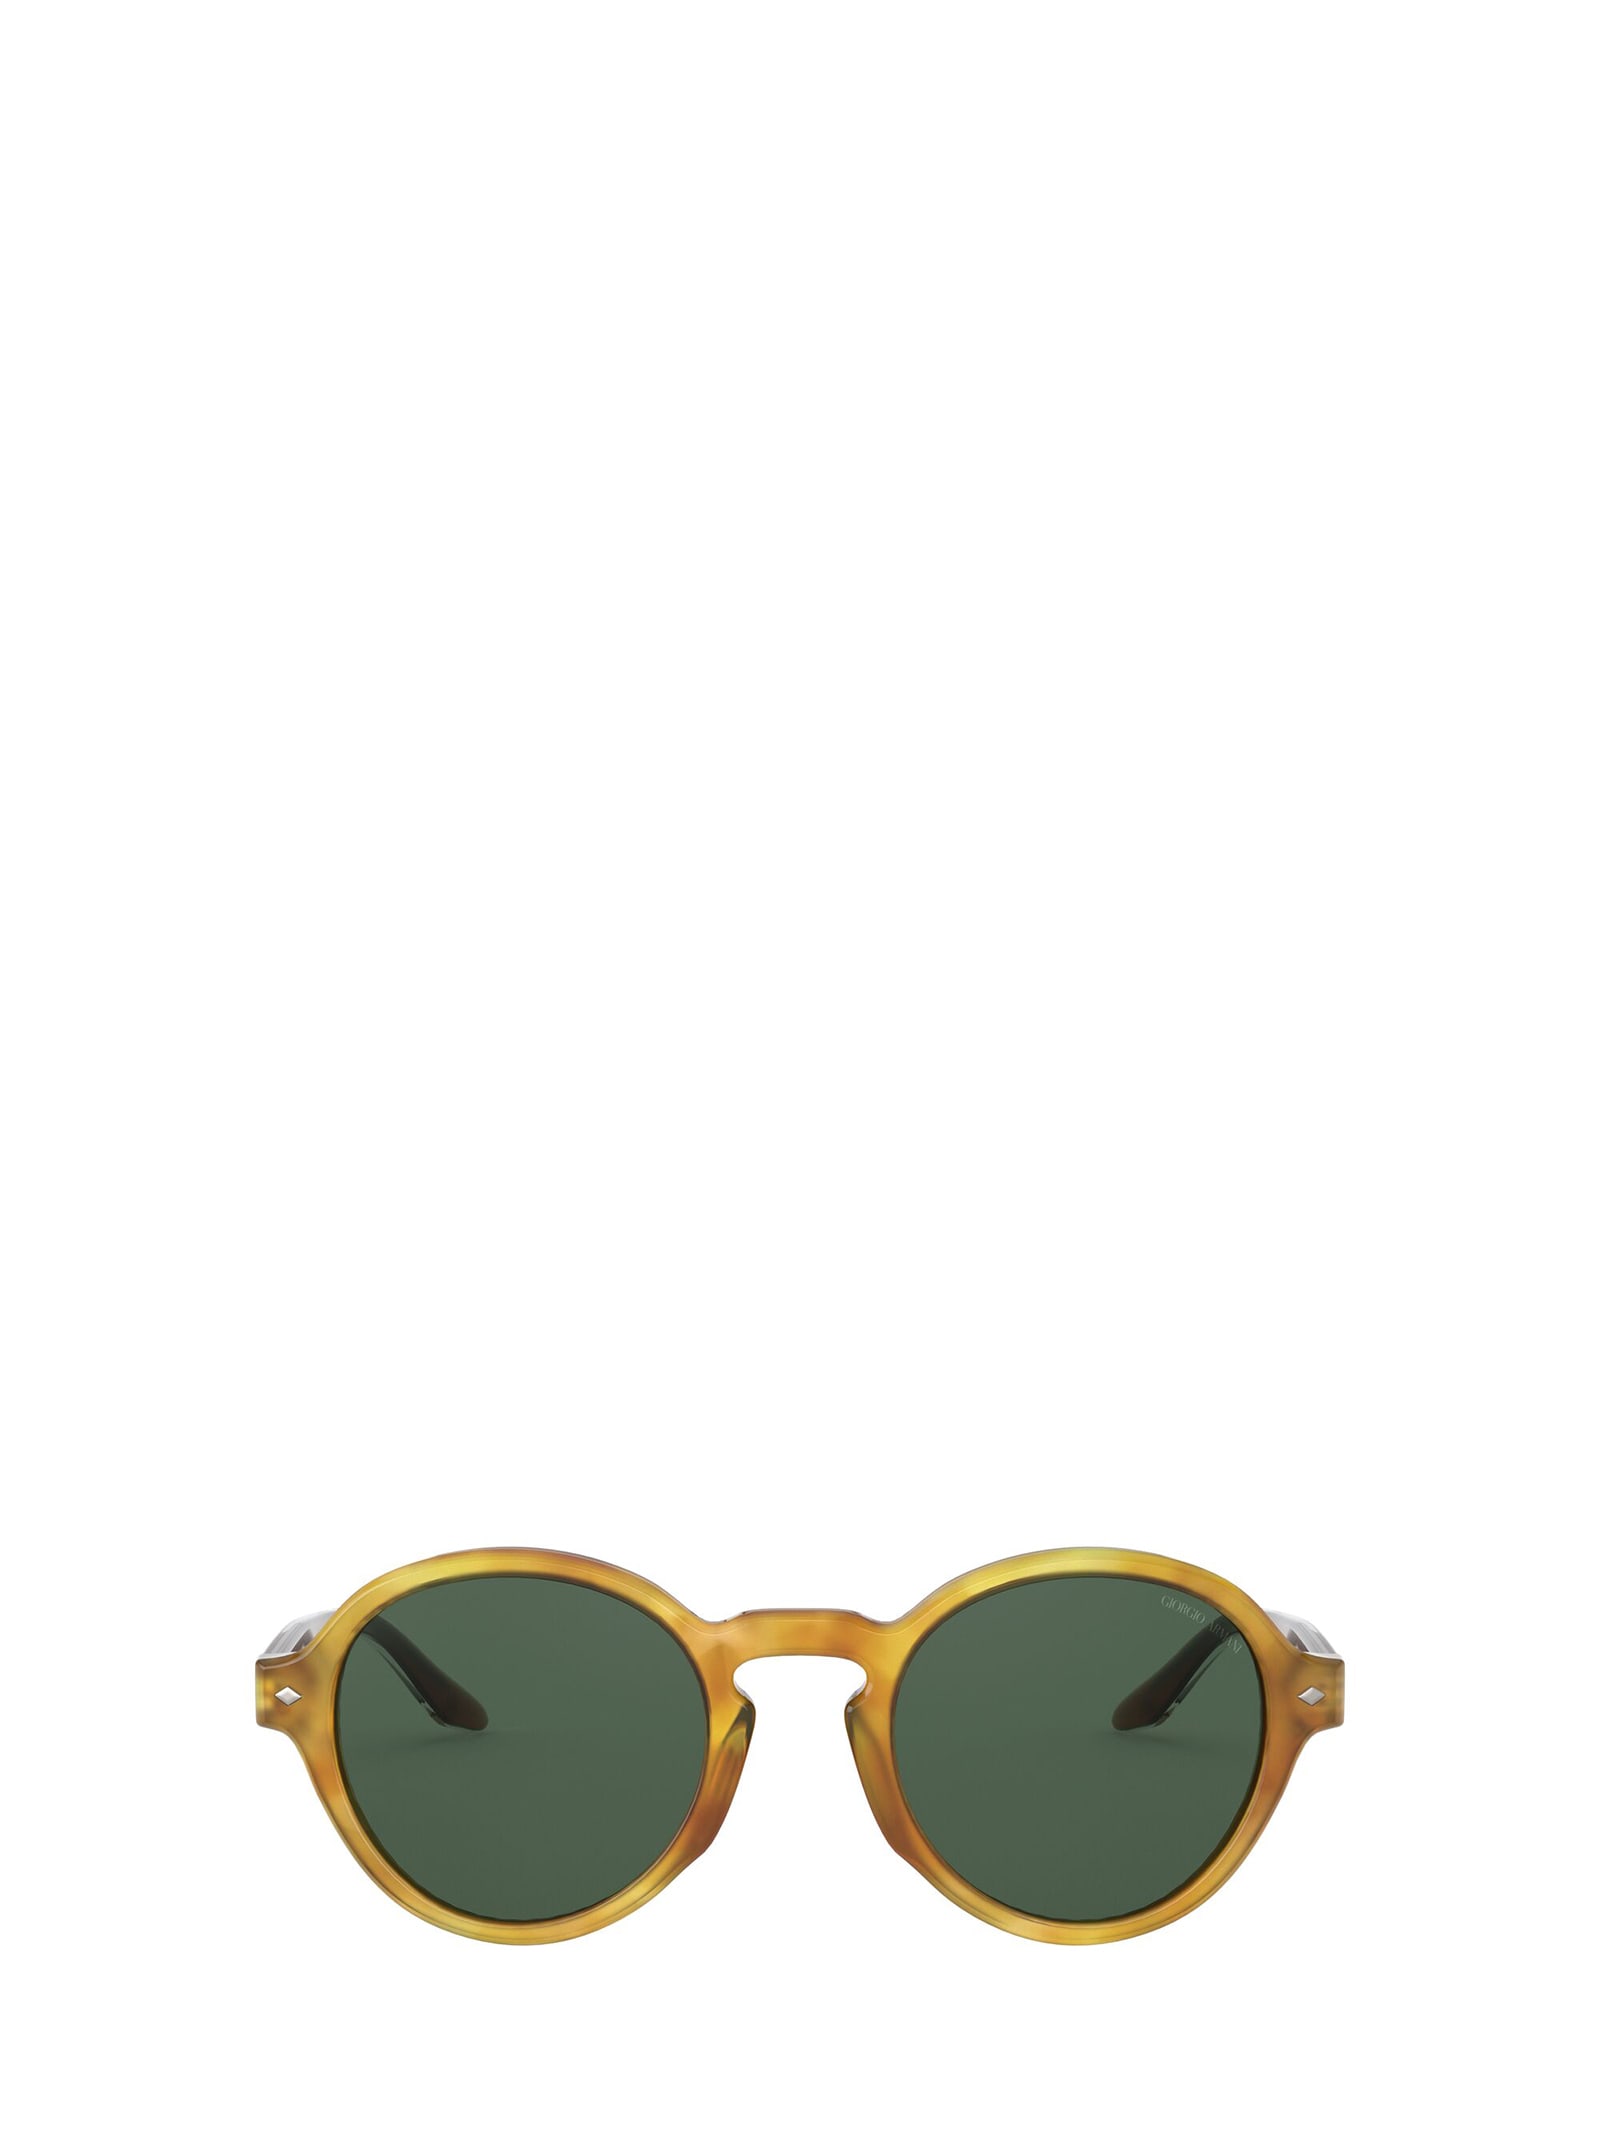 Giorgio Armani Giorgio Armani Ar8130 Yellow Havana Sunglasses